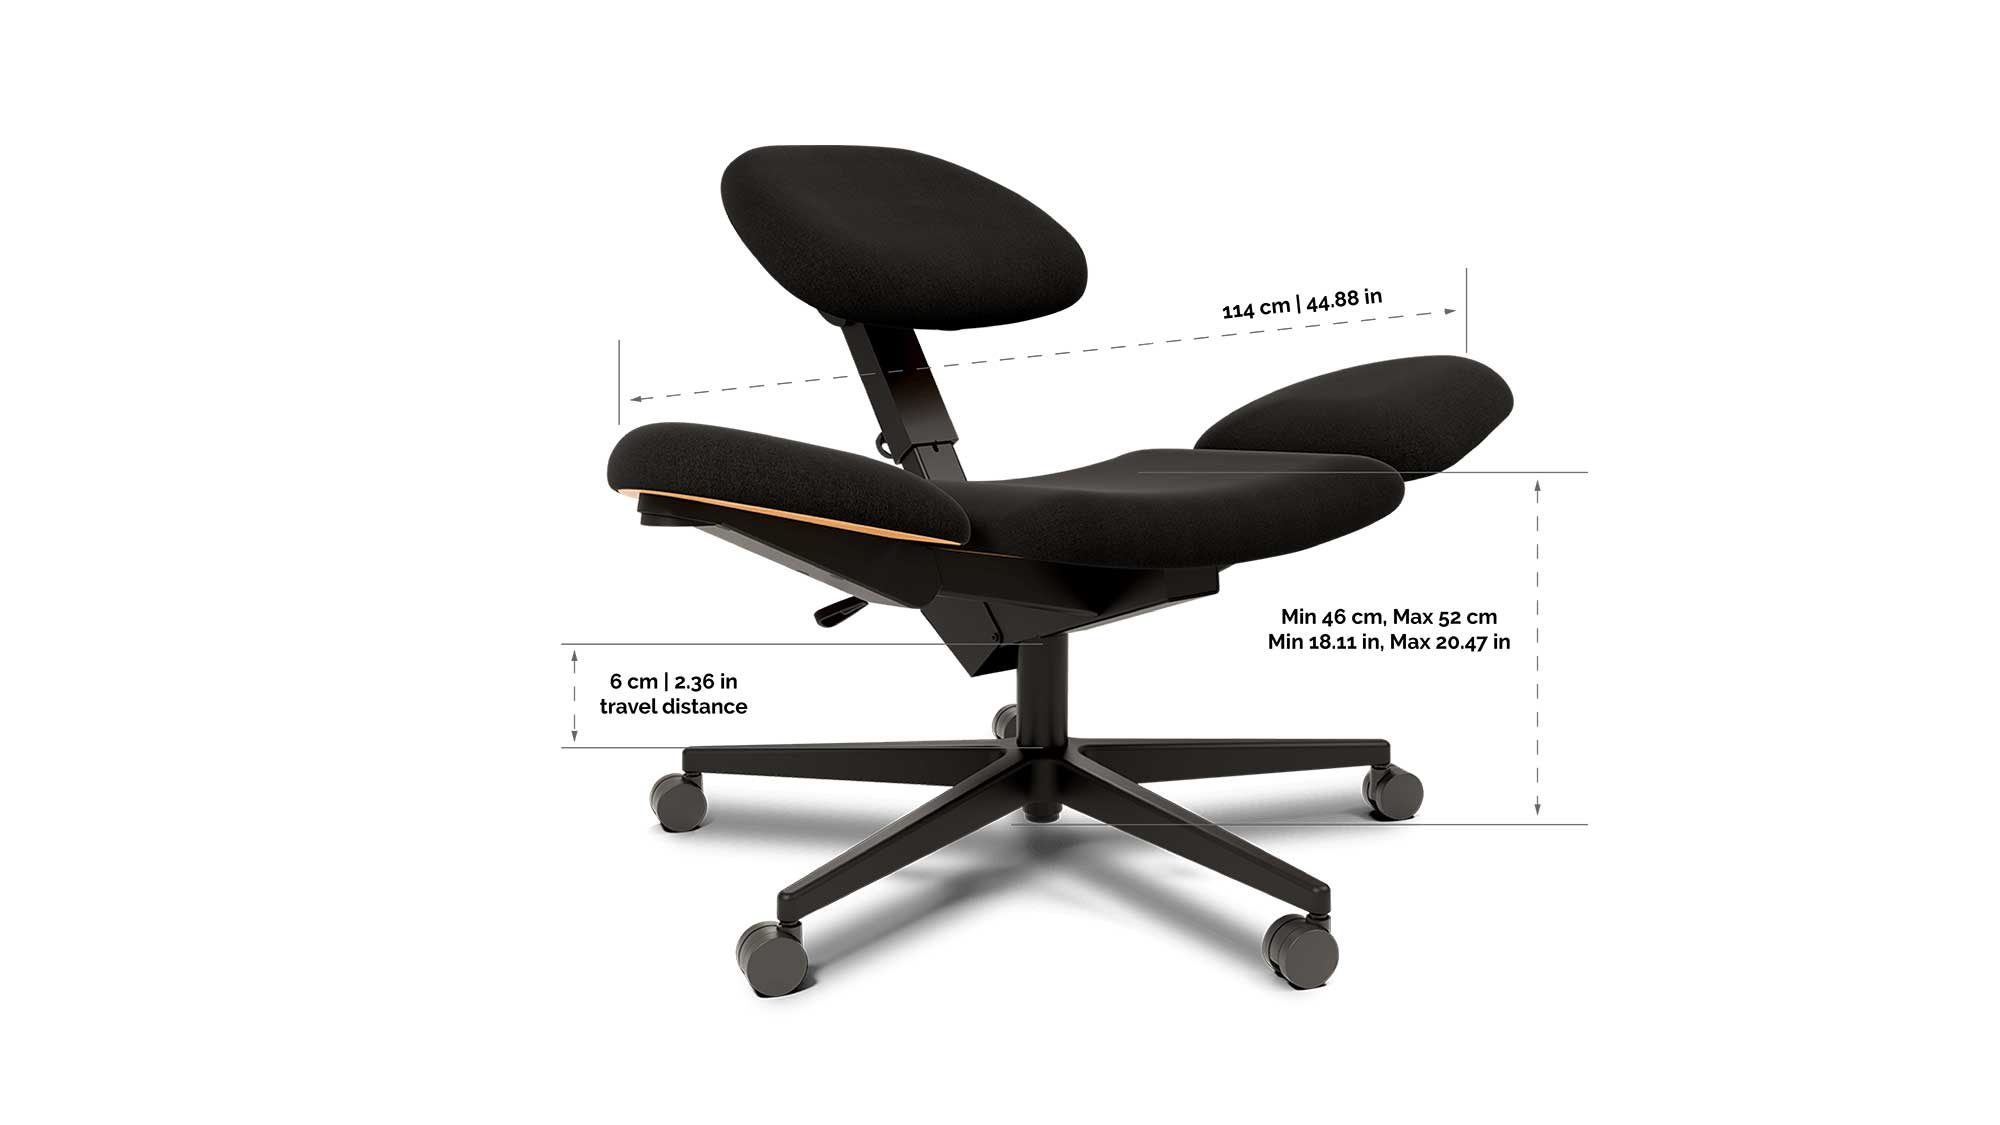 Chair_Dimensions-3d-rendered-1.jpg